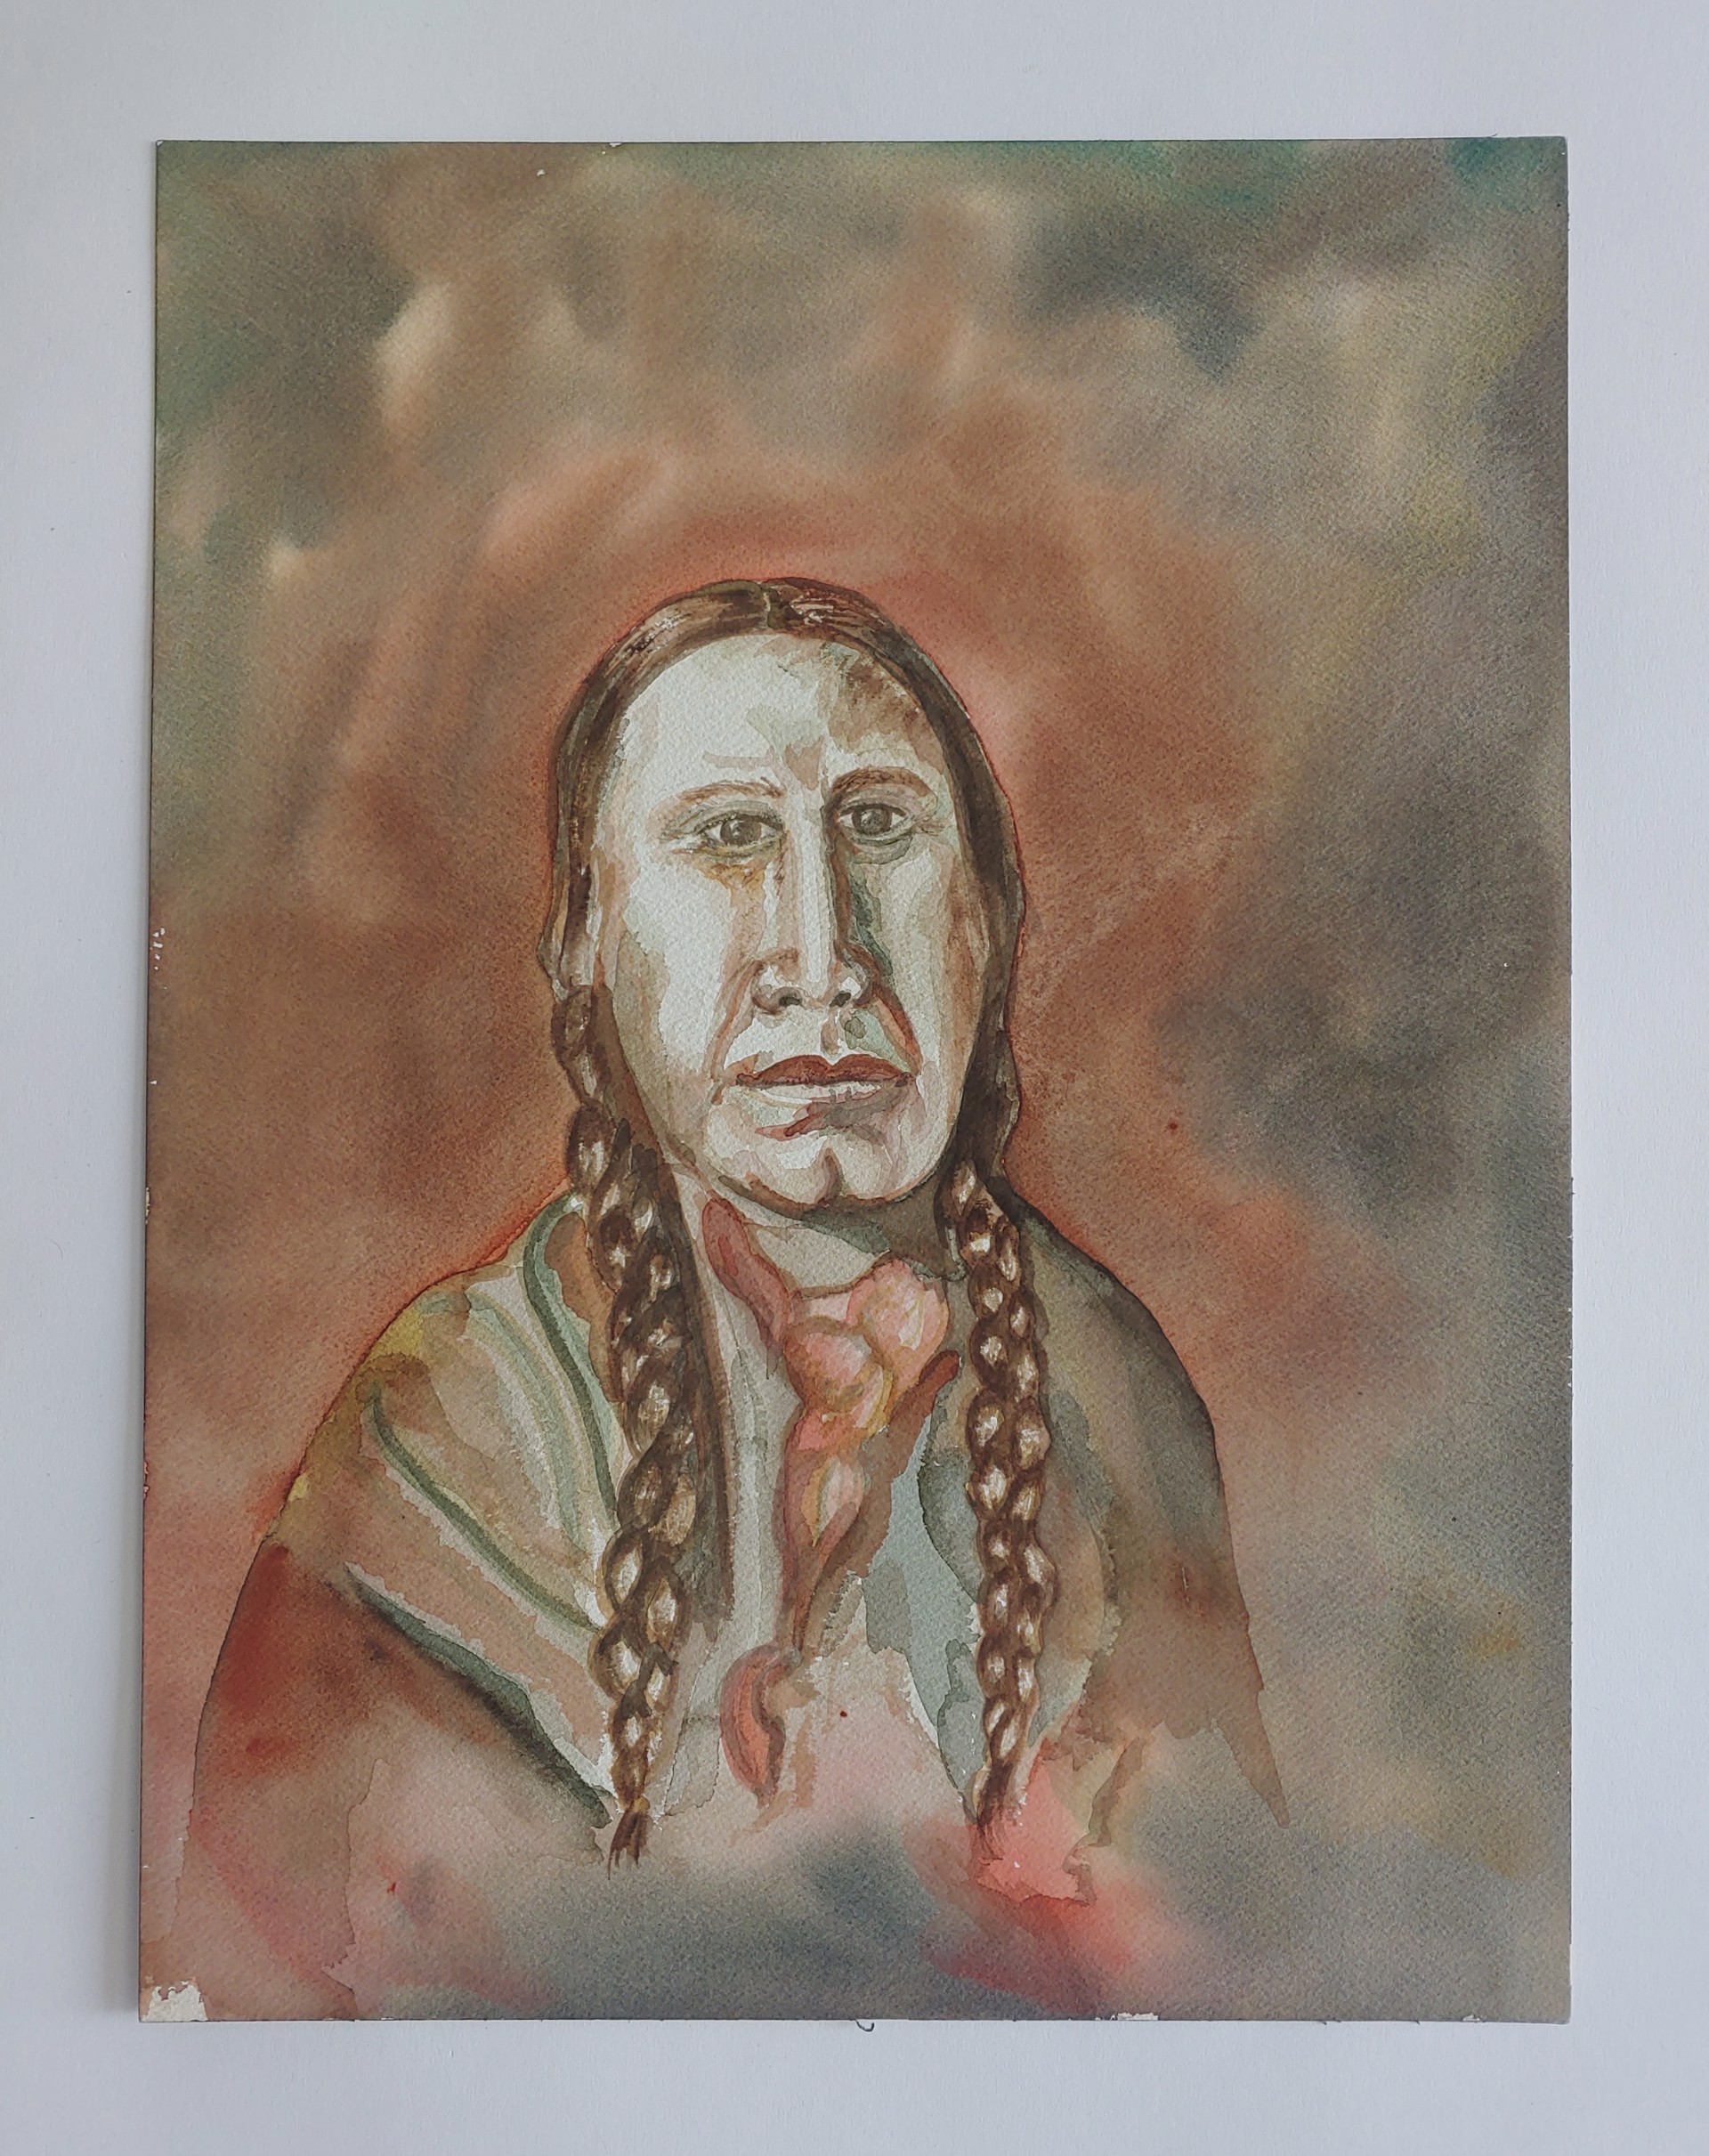 Man's Portrait #2 - Watercolor by David Amdur